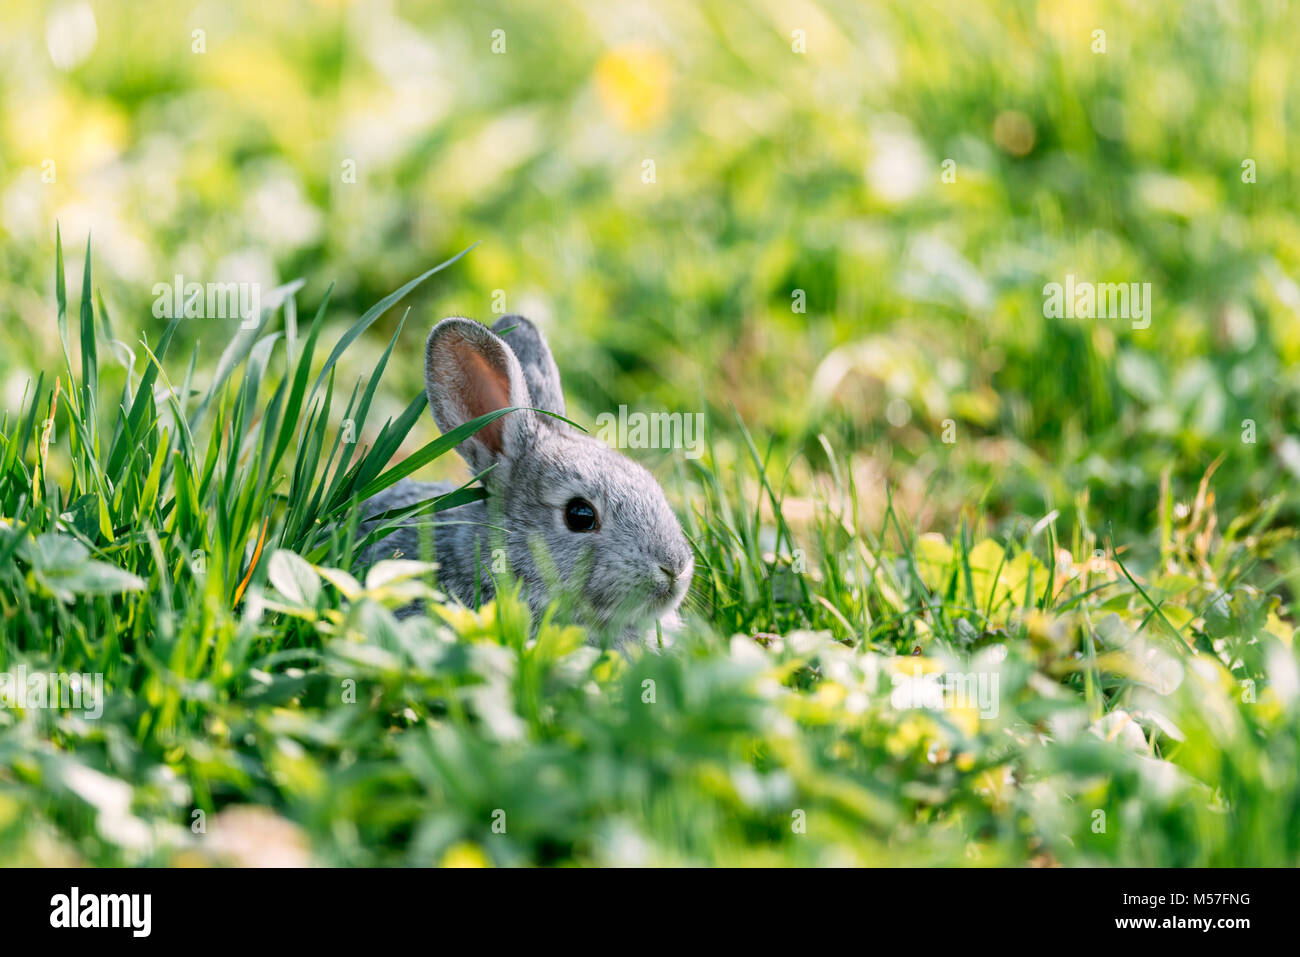 Small grey rabbit in green grass closeup Stock Photo